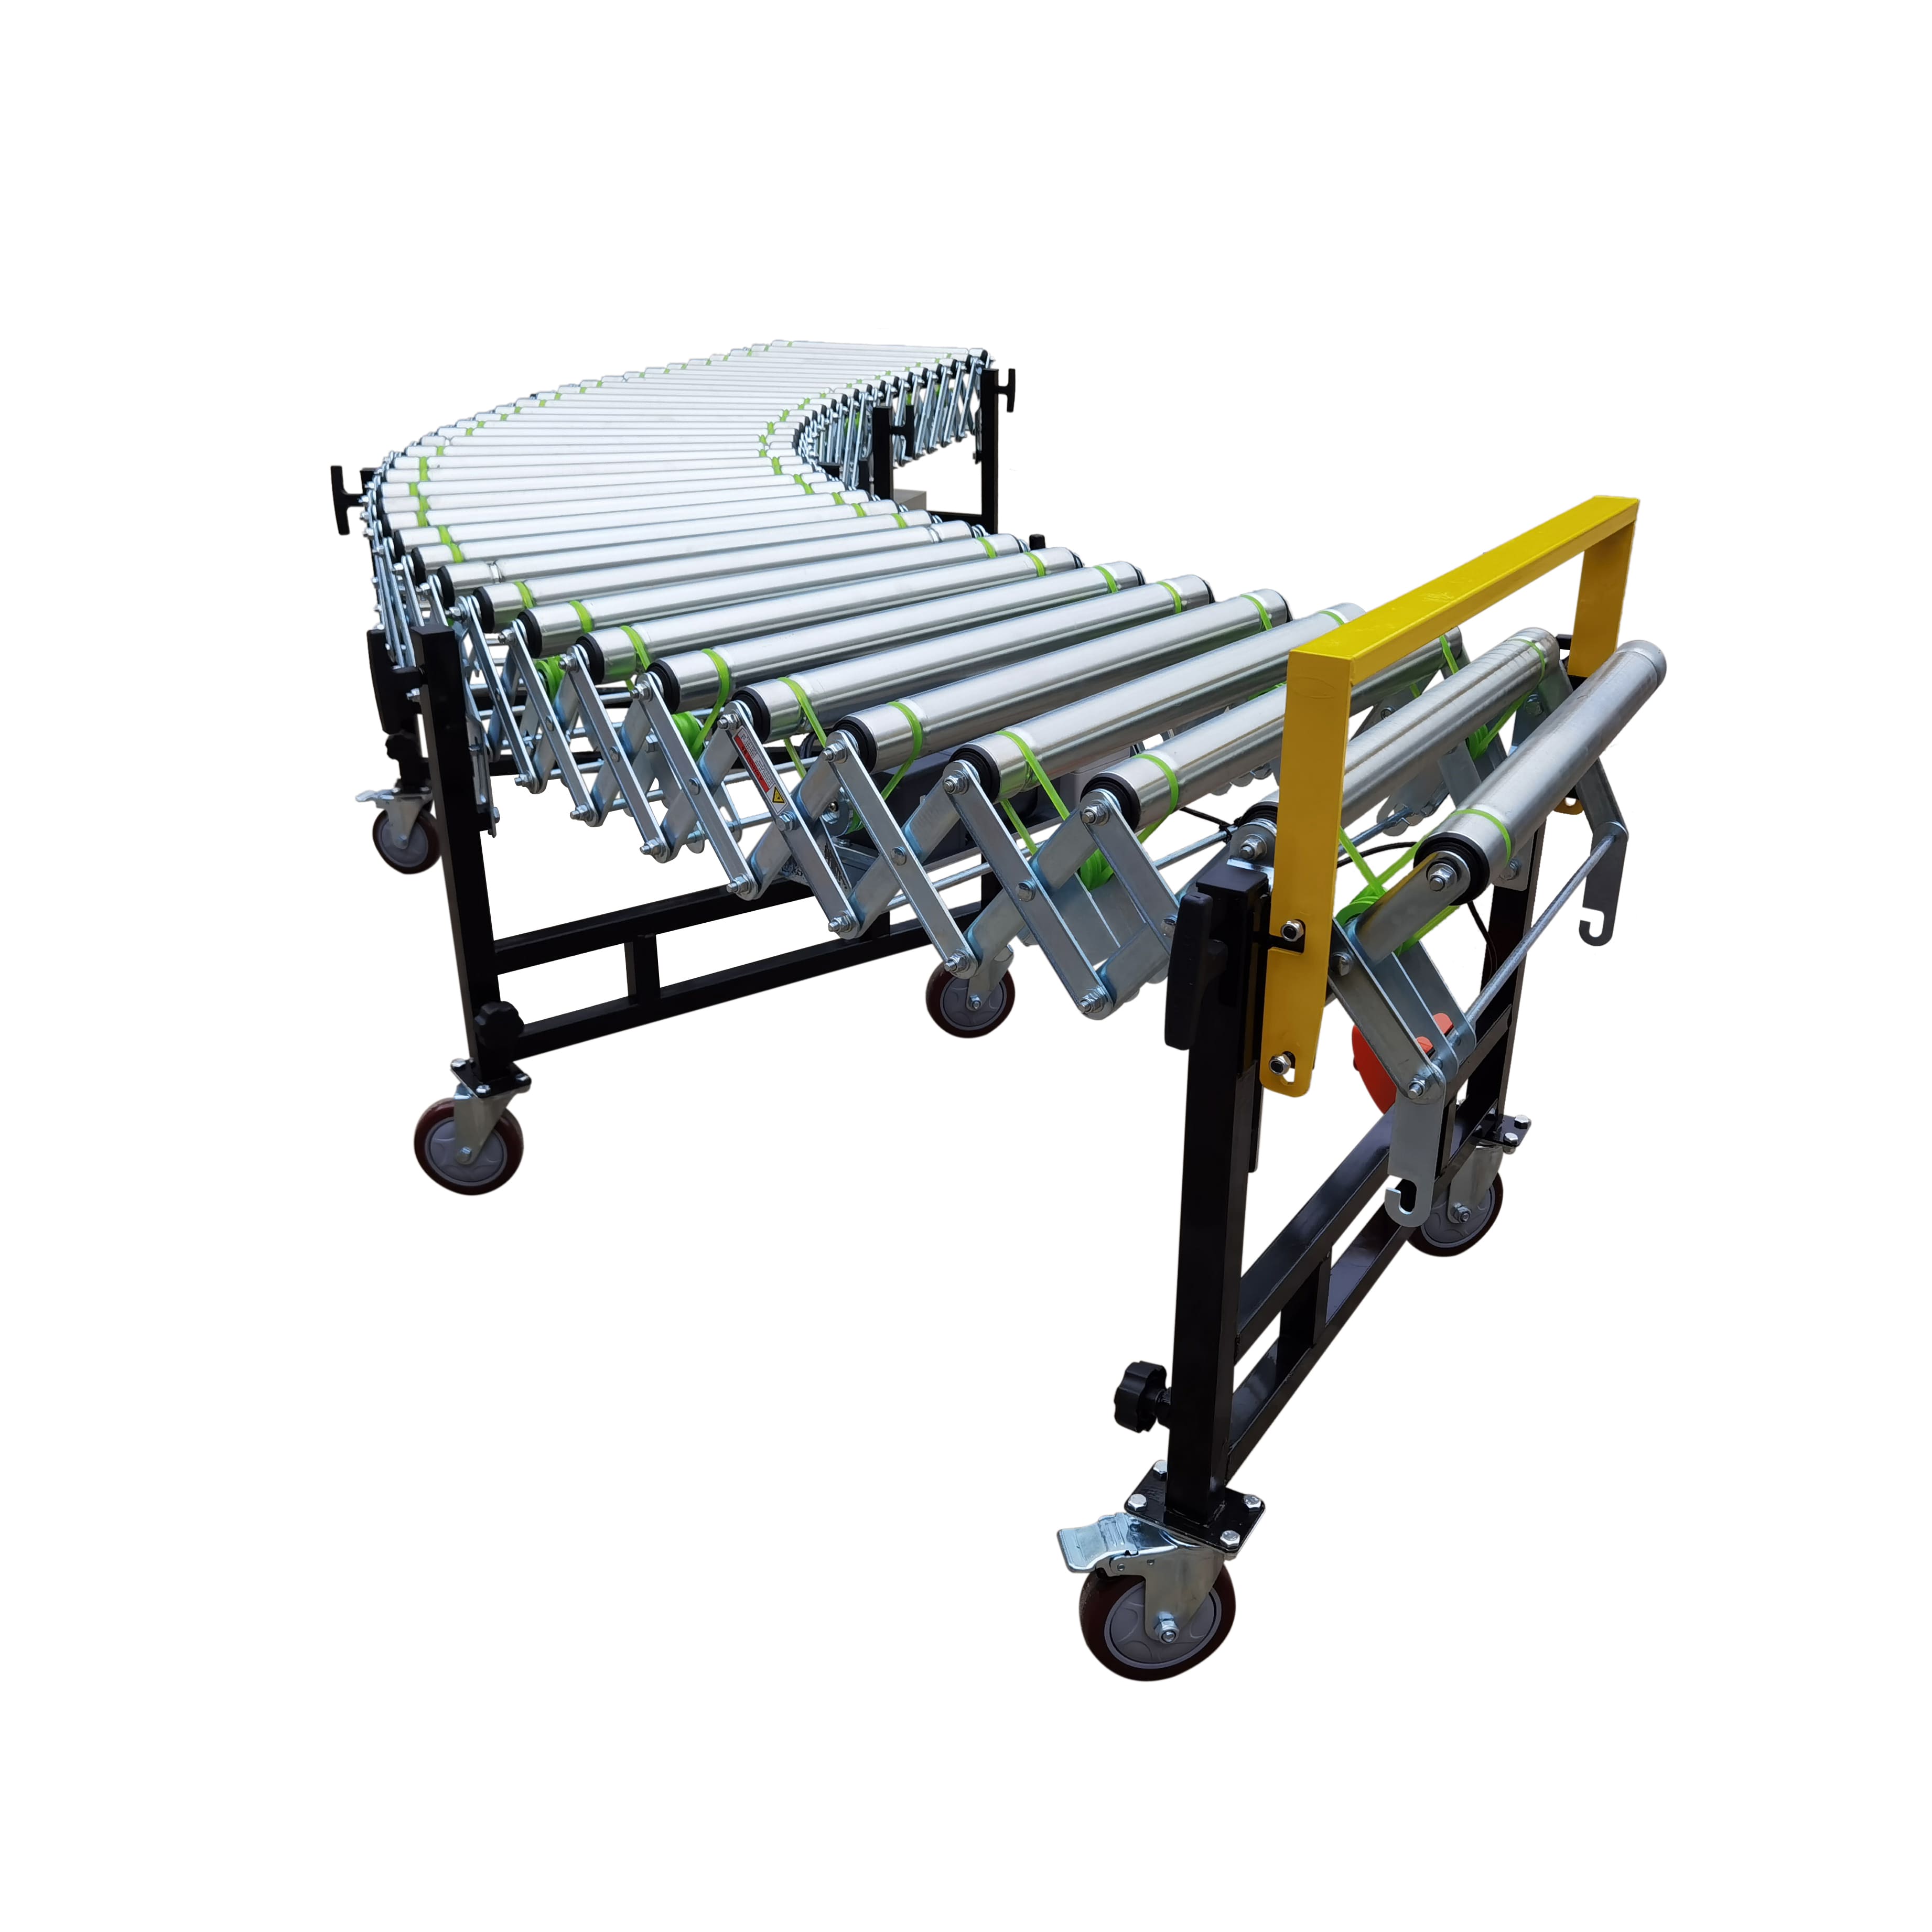  Belt-Driven Roller Conveyors